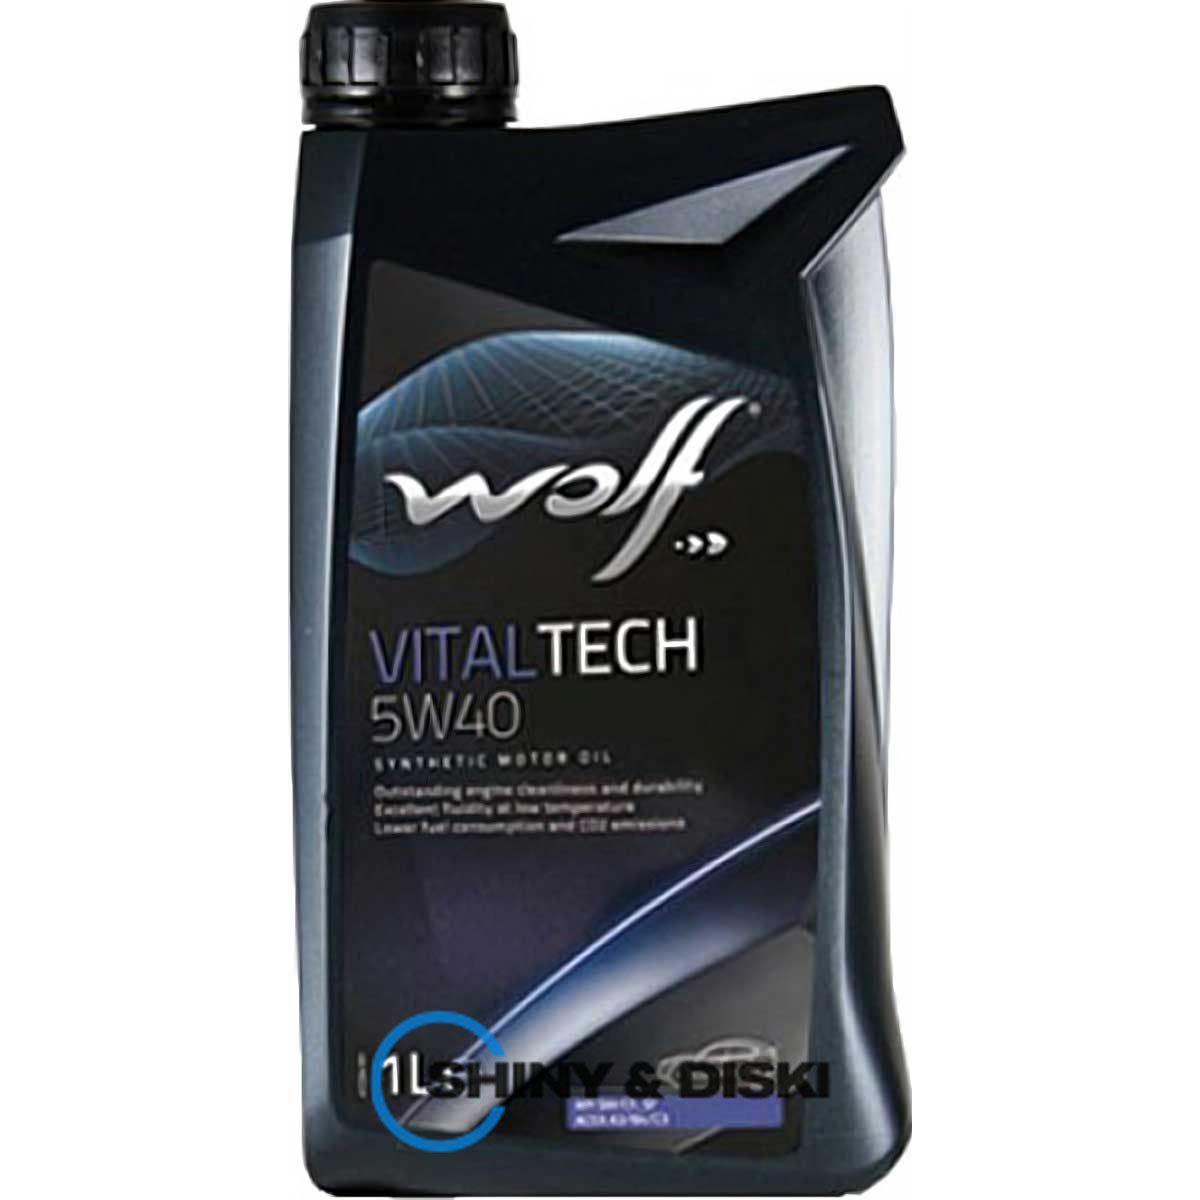 wolf vitaltech